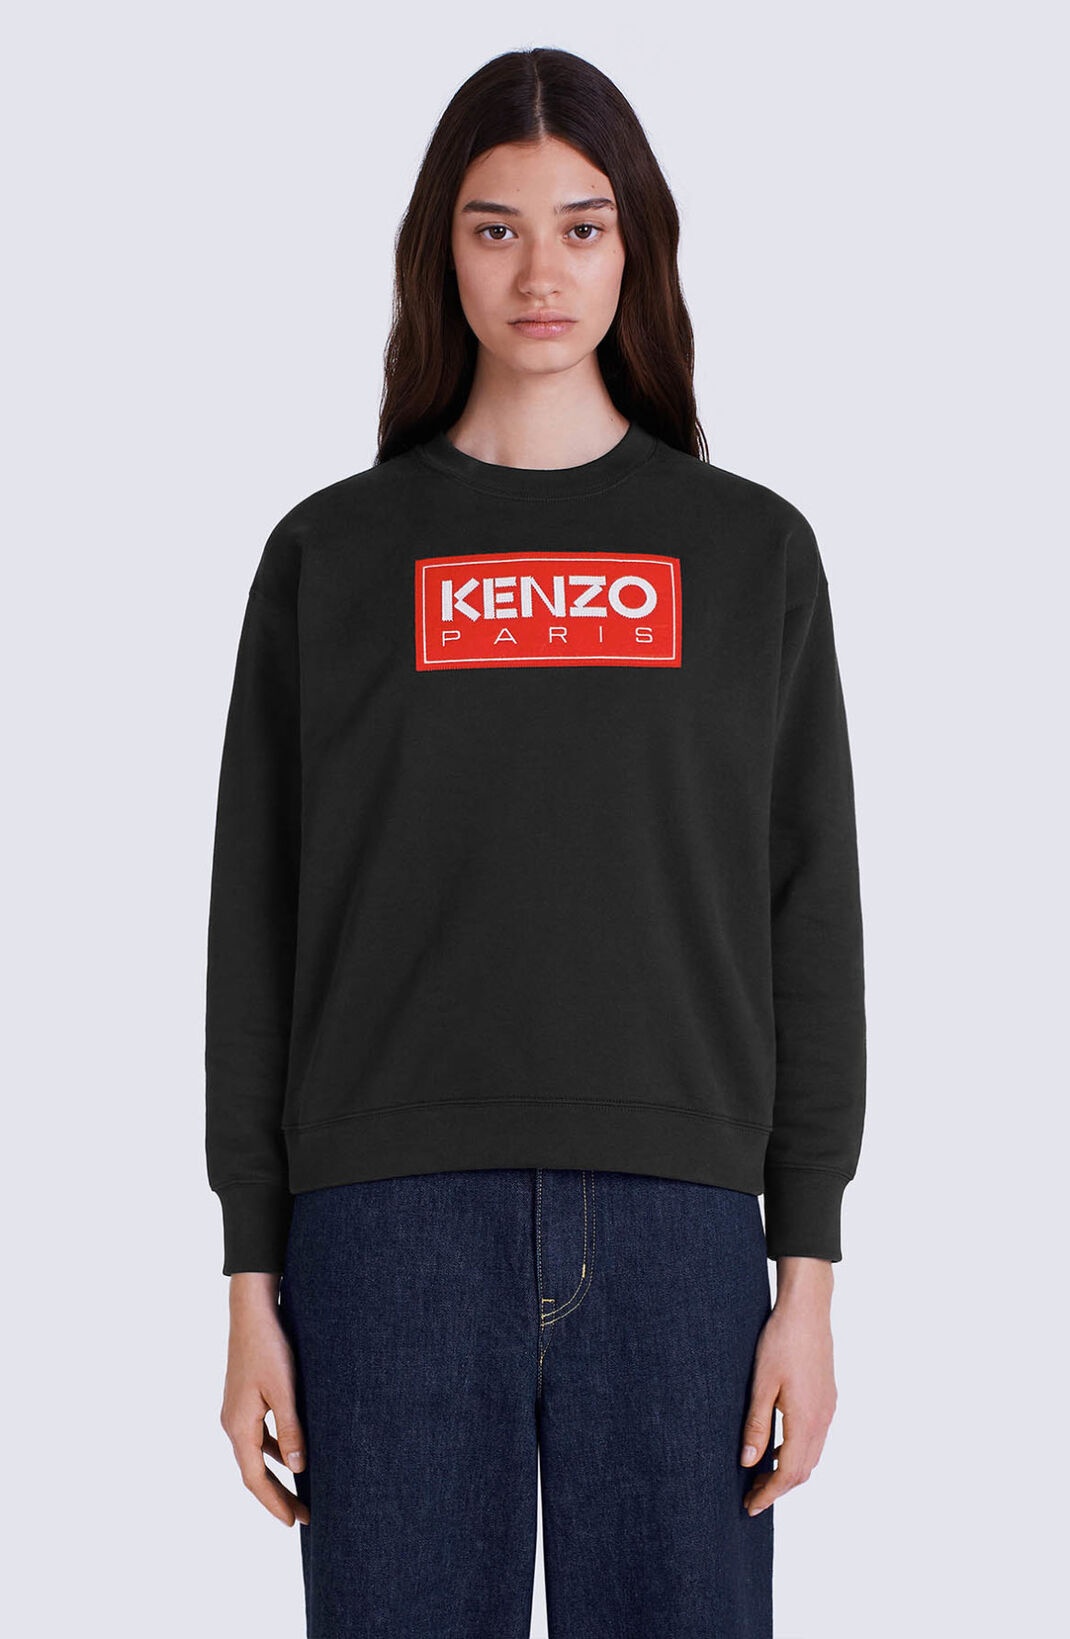 KENZO Paris sweatshirt - 5